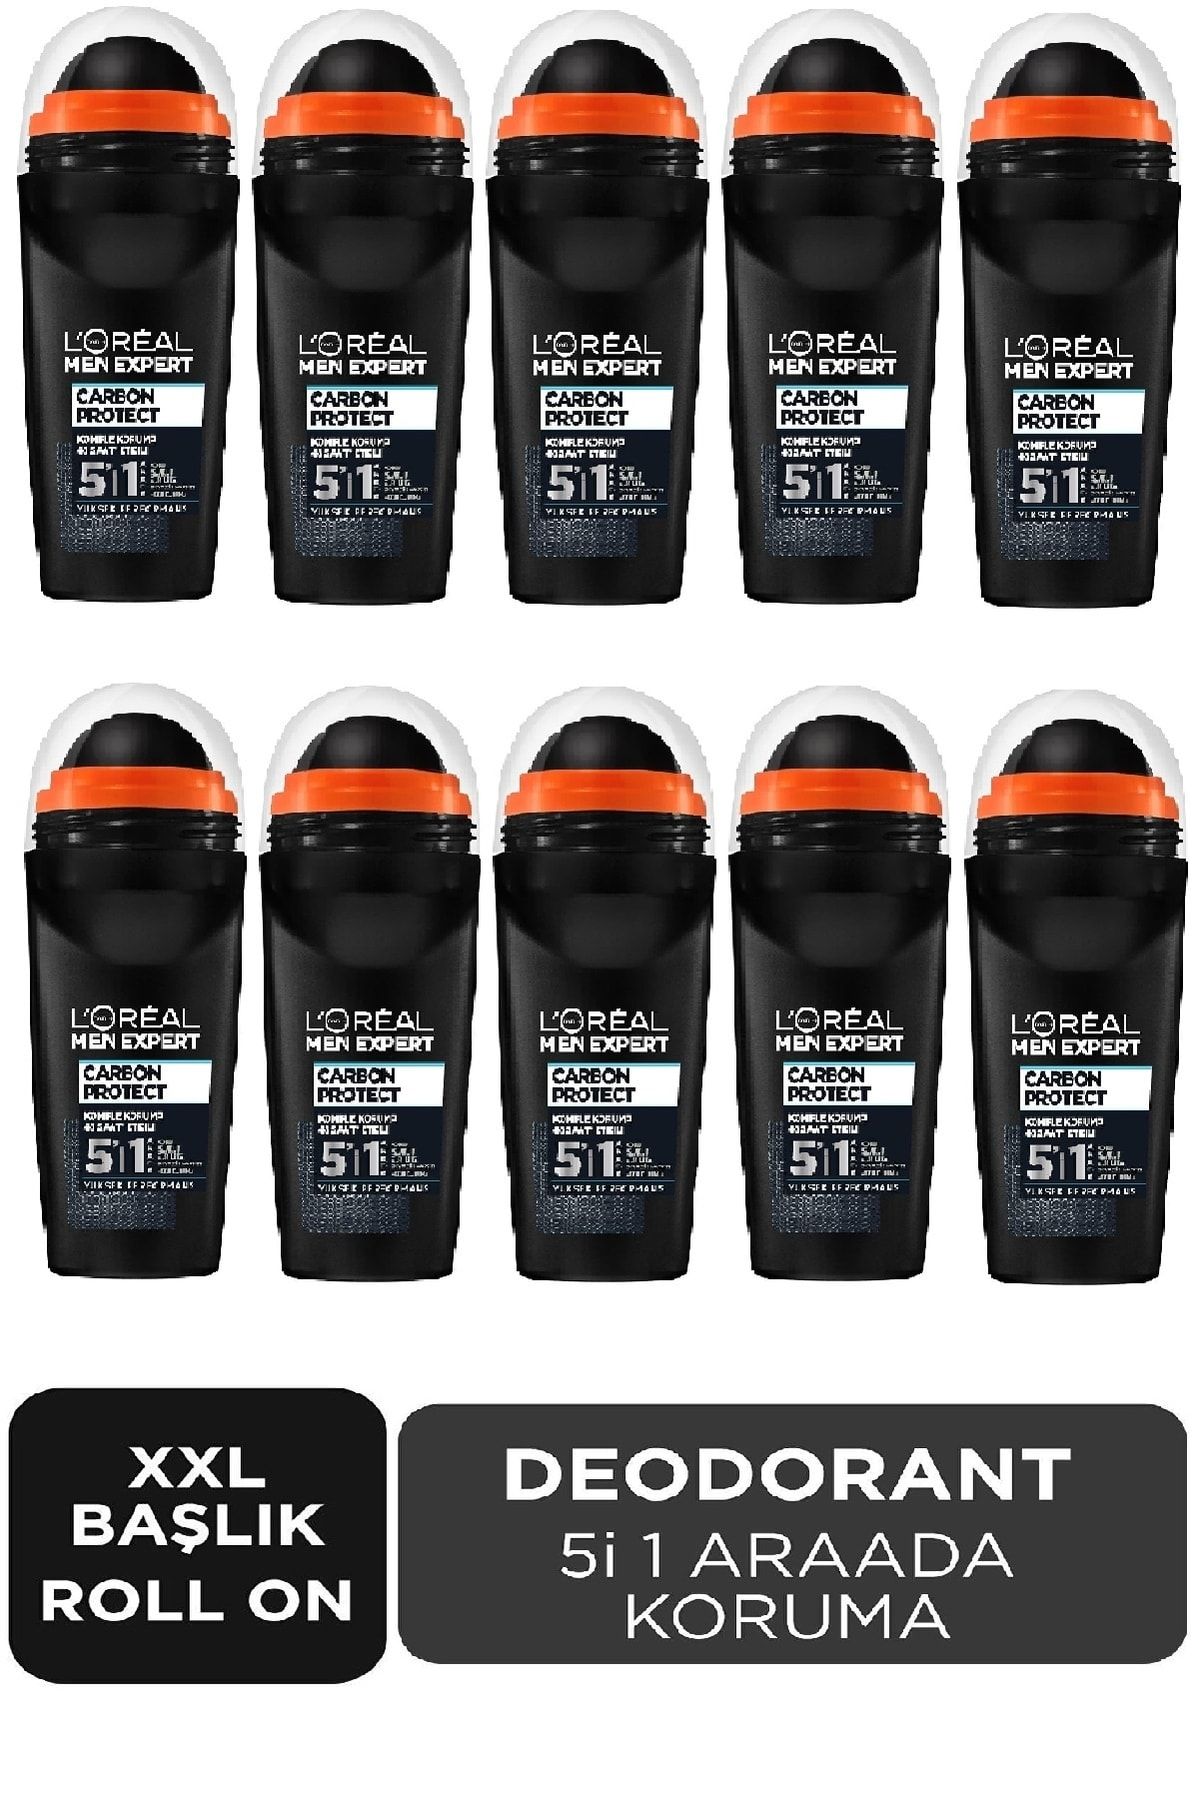 L'Oreal Paris Men Expert Erkek Deodorant 5 I 1 Arada Carbon Protect Komple Koruma Roll On 50 Ml X 10 Adet ( Koli )